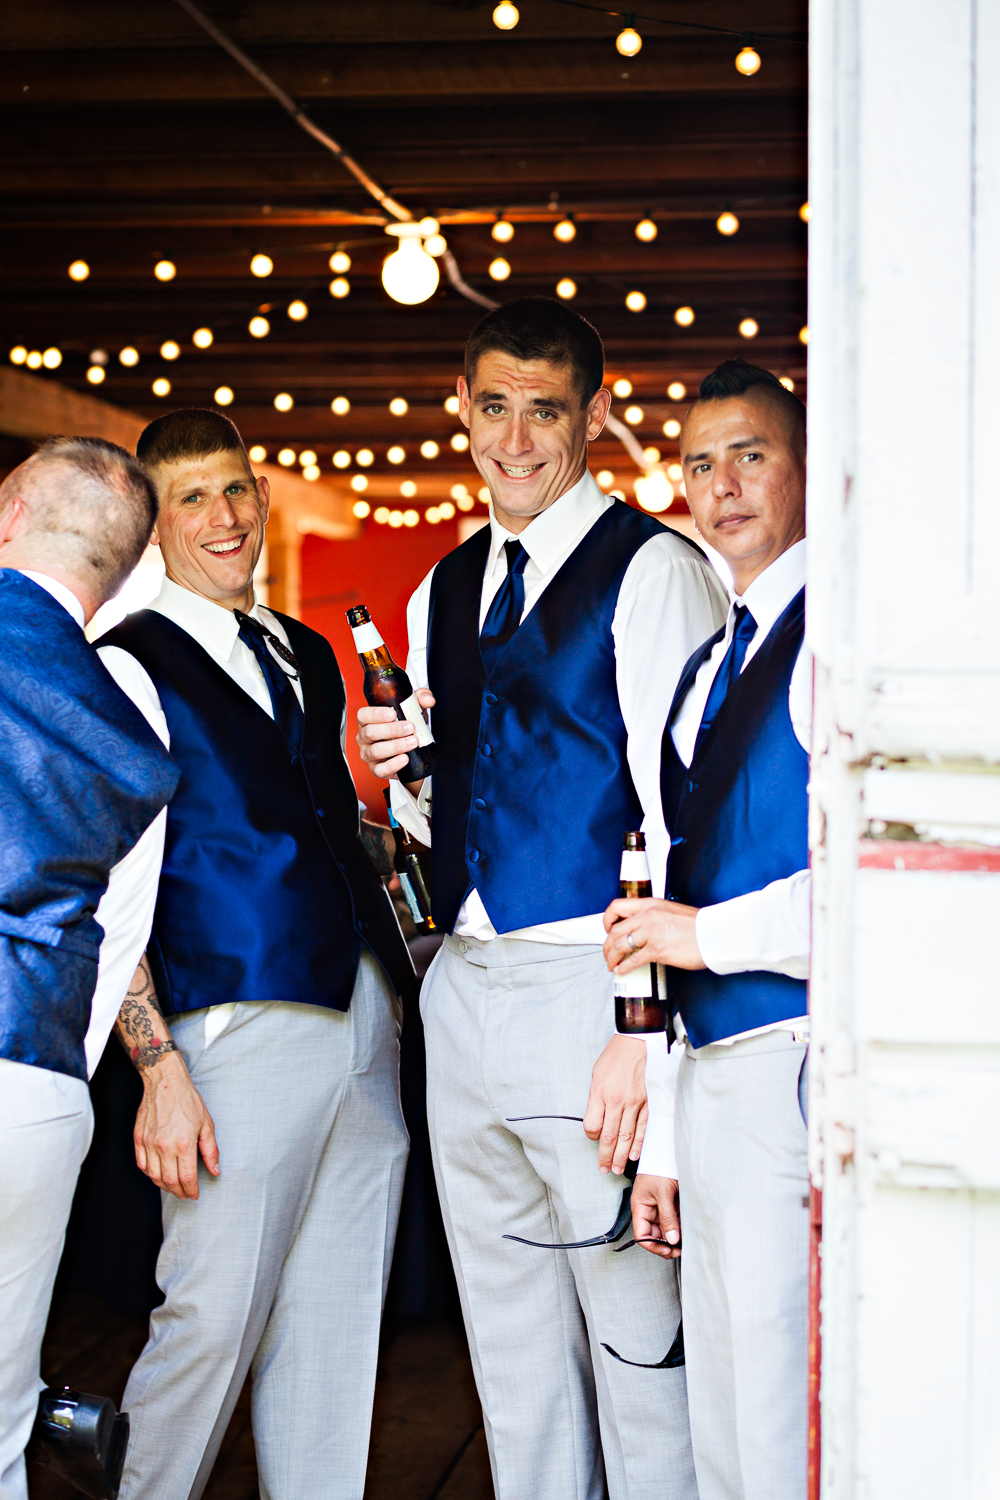 bozeman-montana-wedding-roys-barn-groomsmen-before-reception.jpg